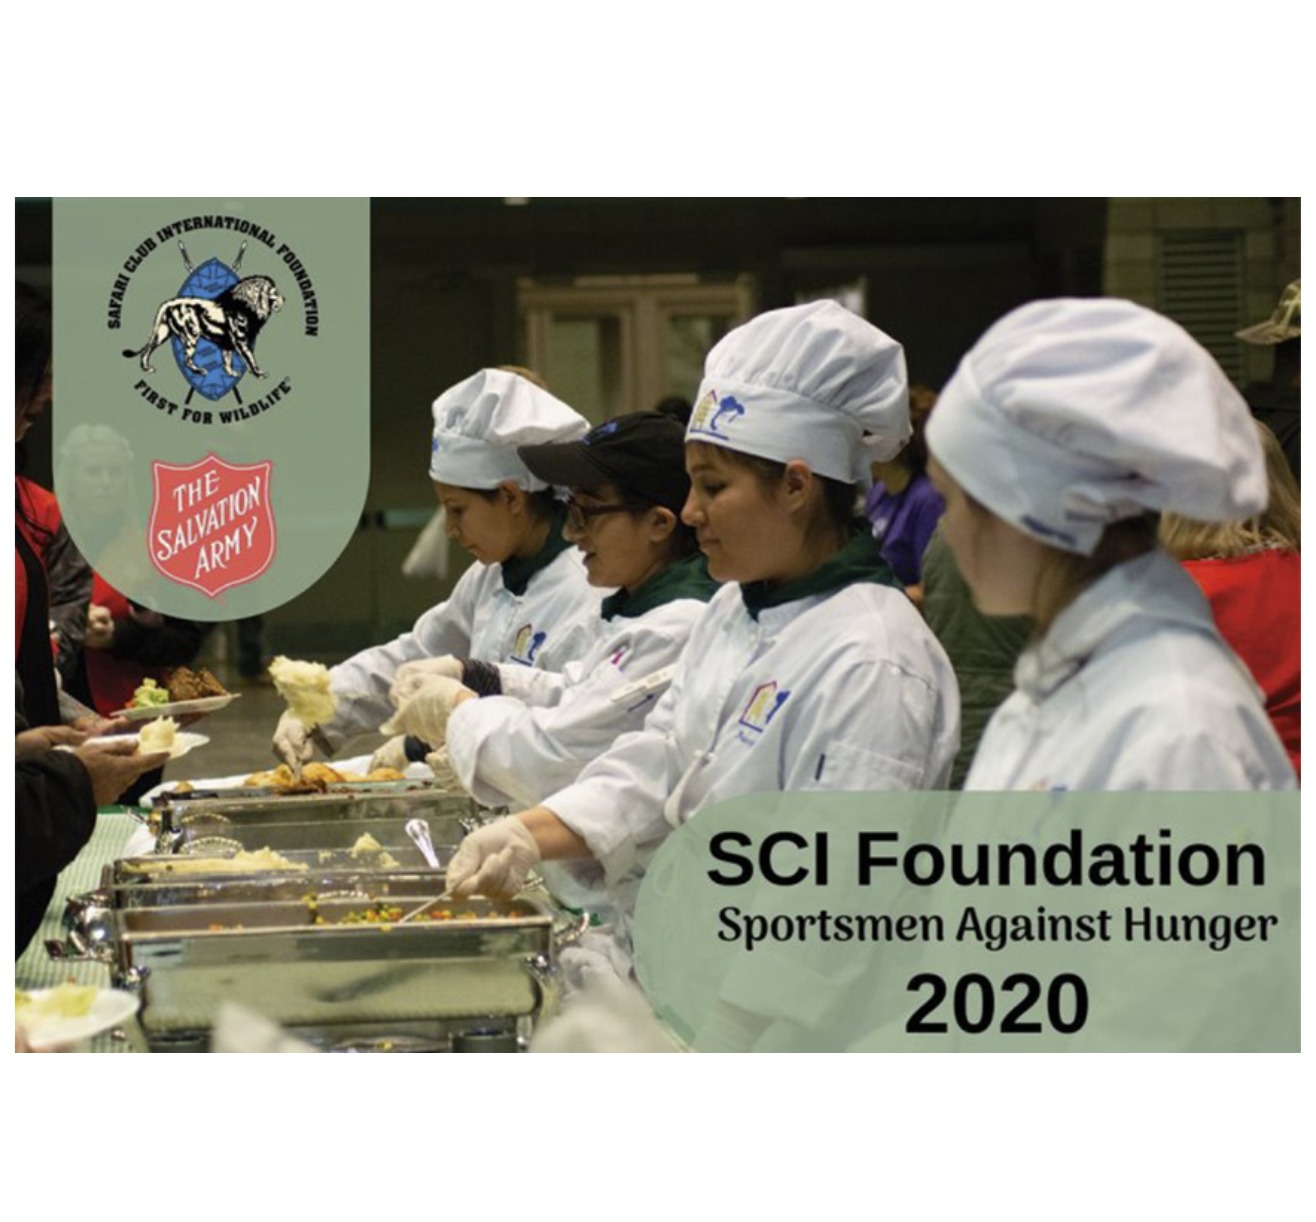 SCI Foundation Sportsmen Against Hunger volunteers